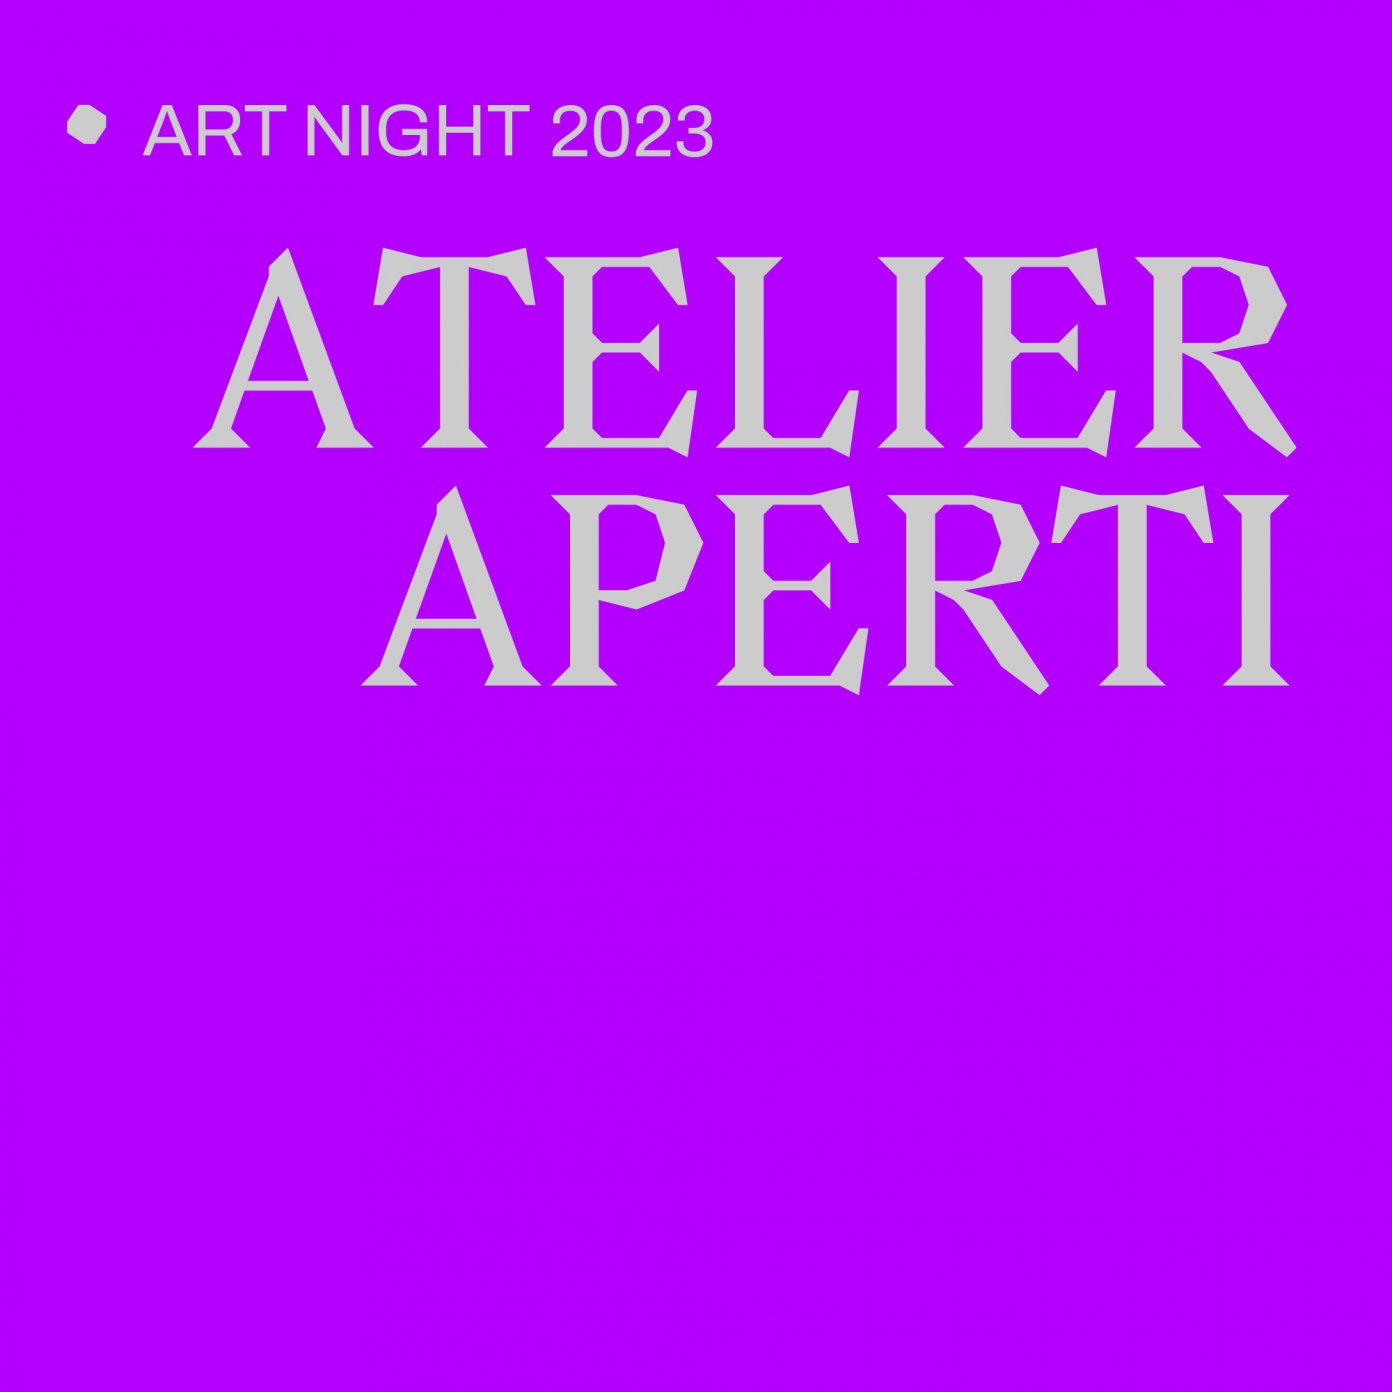 Atelier aperti - Art Night 2023